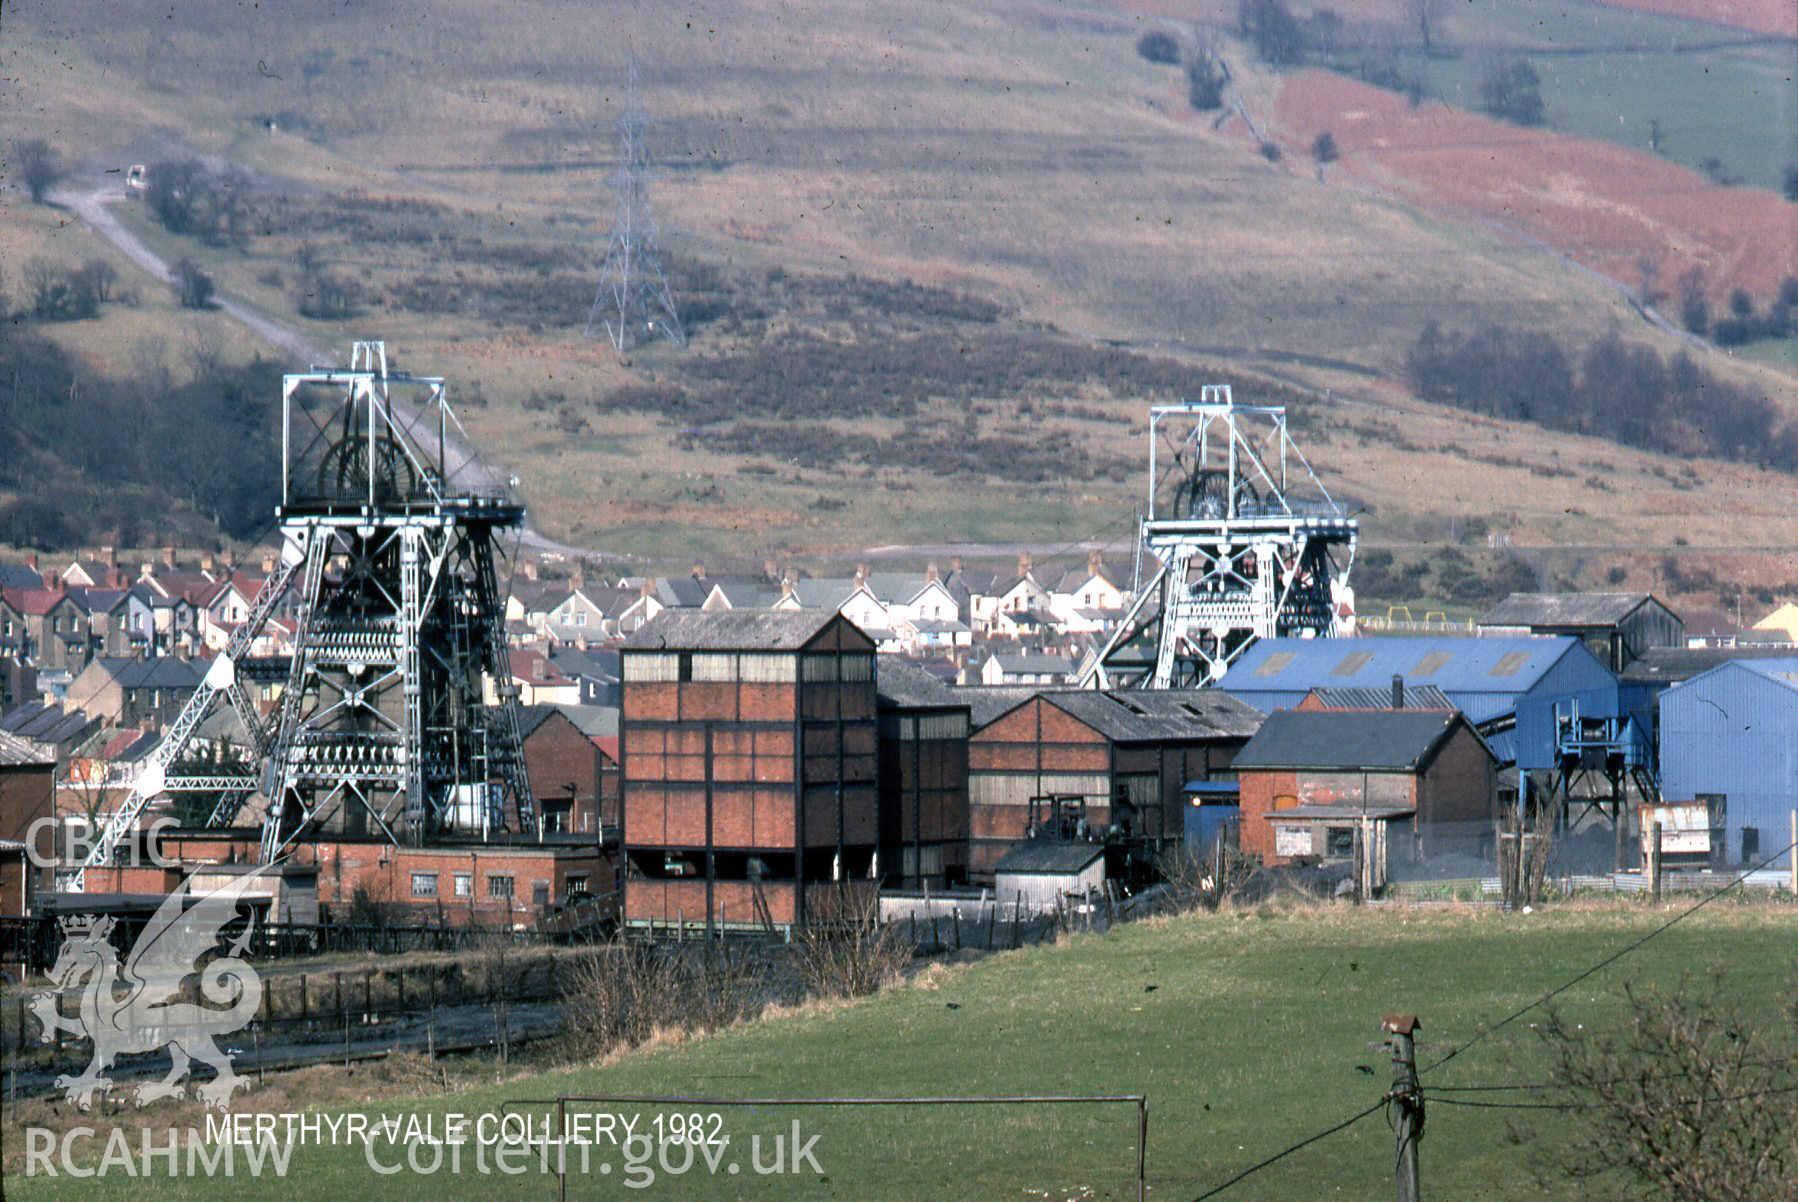 Digital photograph showing Merthyr Vale Colliery, taken 1982